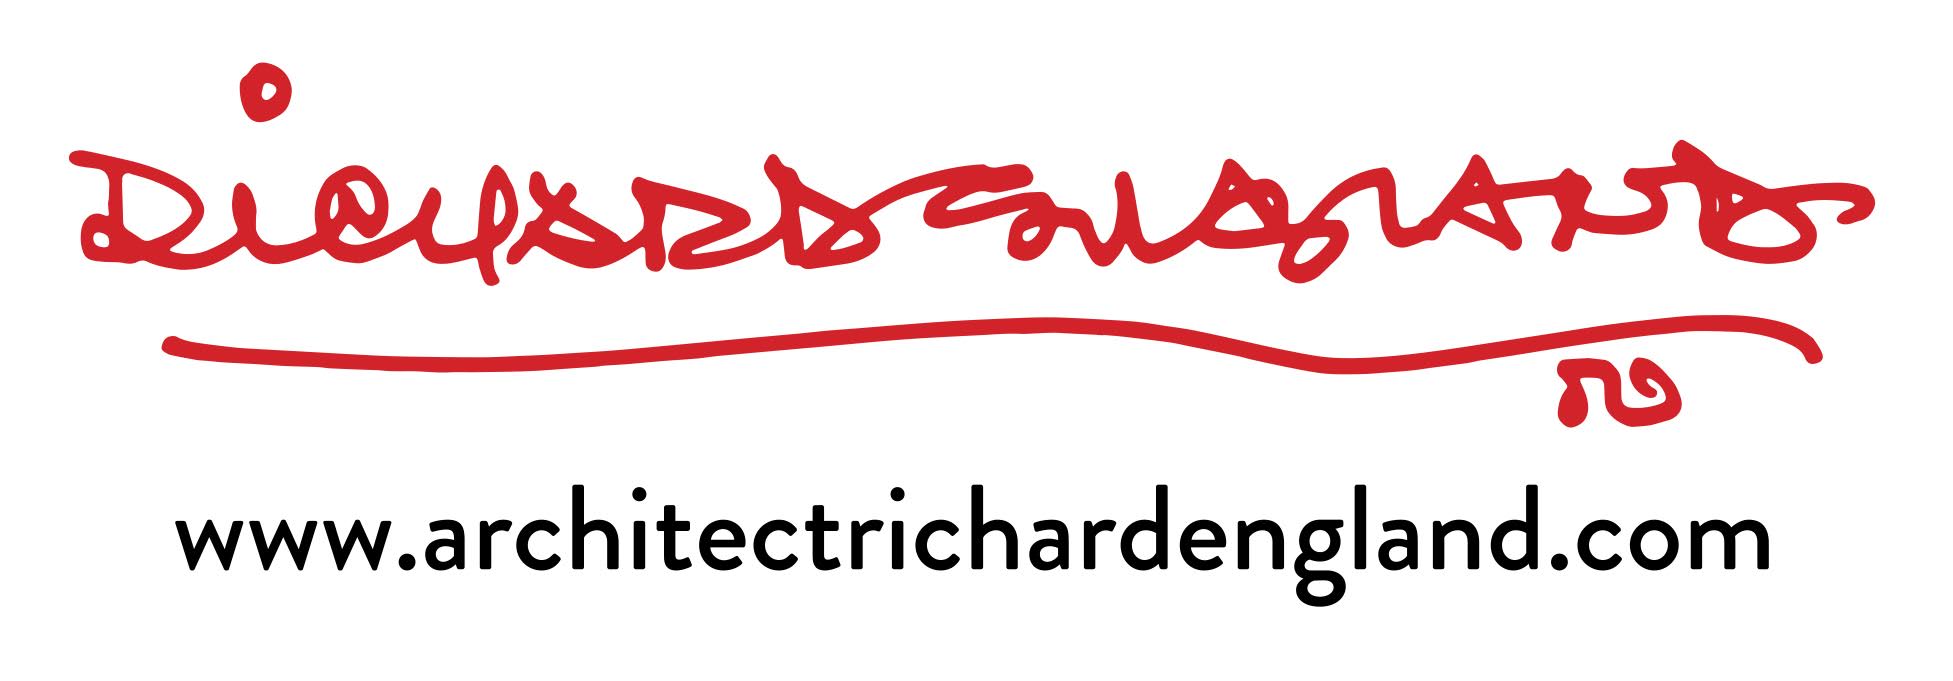 Richard England Logo